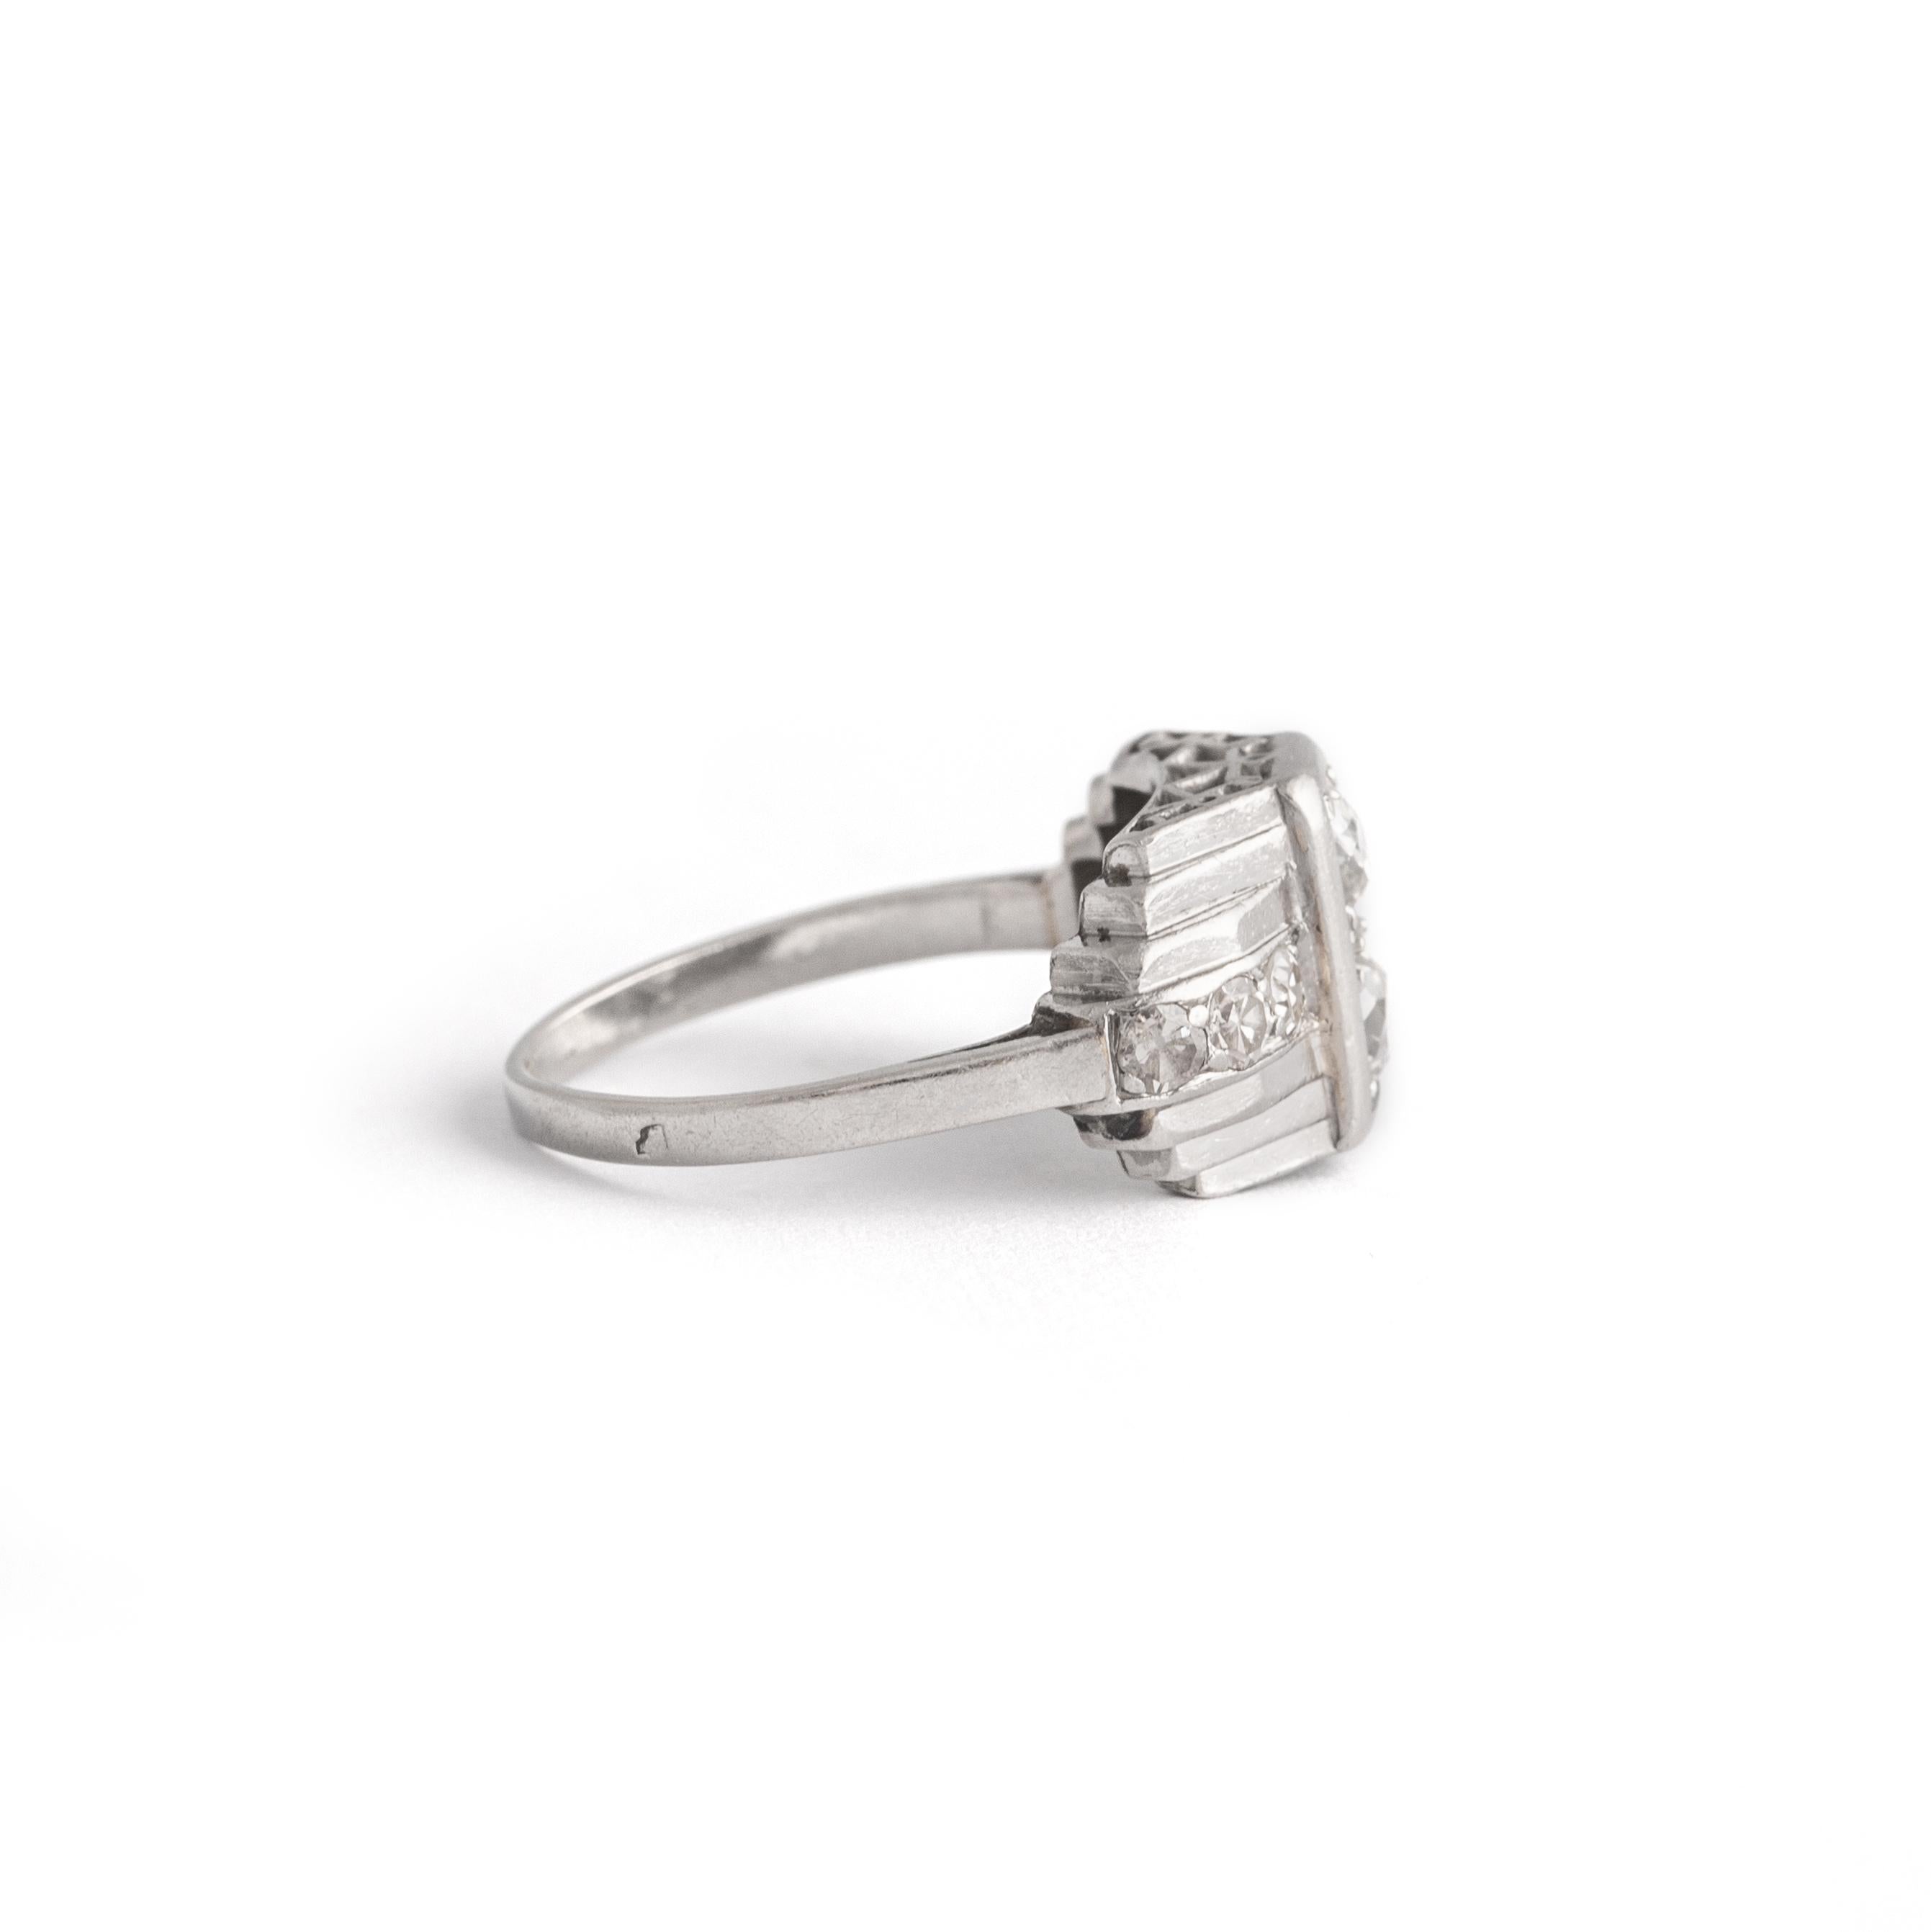 Art Deco Diamond Platinum Ring.
Old mine cut Diamond. Circa 1925. 
Size: 5.25 US.
Total gross weight: 4.66 grams.